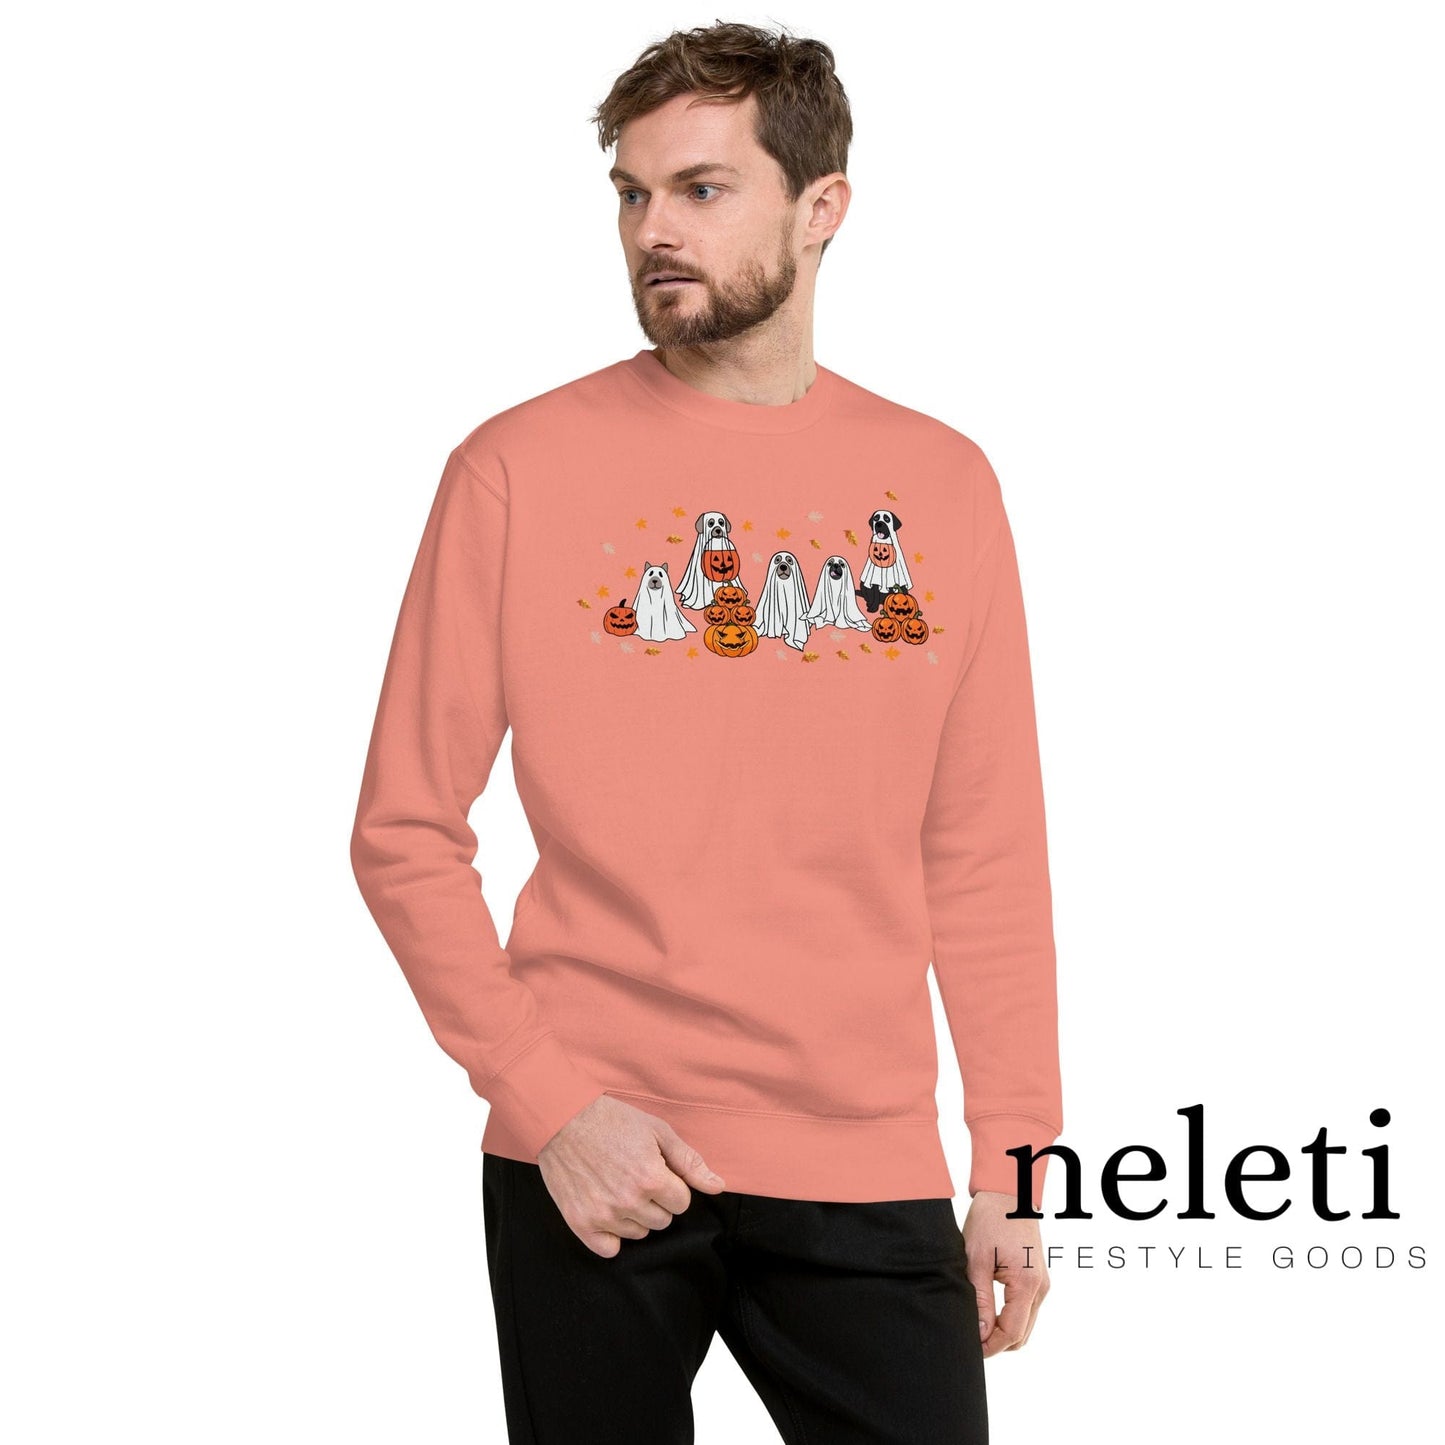 neleti.com-haloween-dusty-rose-sweatshirt-for-dog-lovers